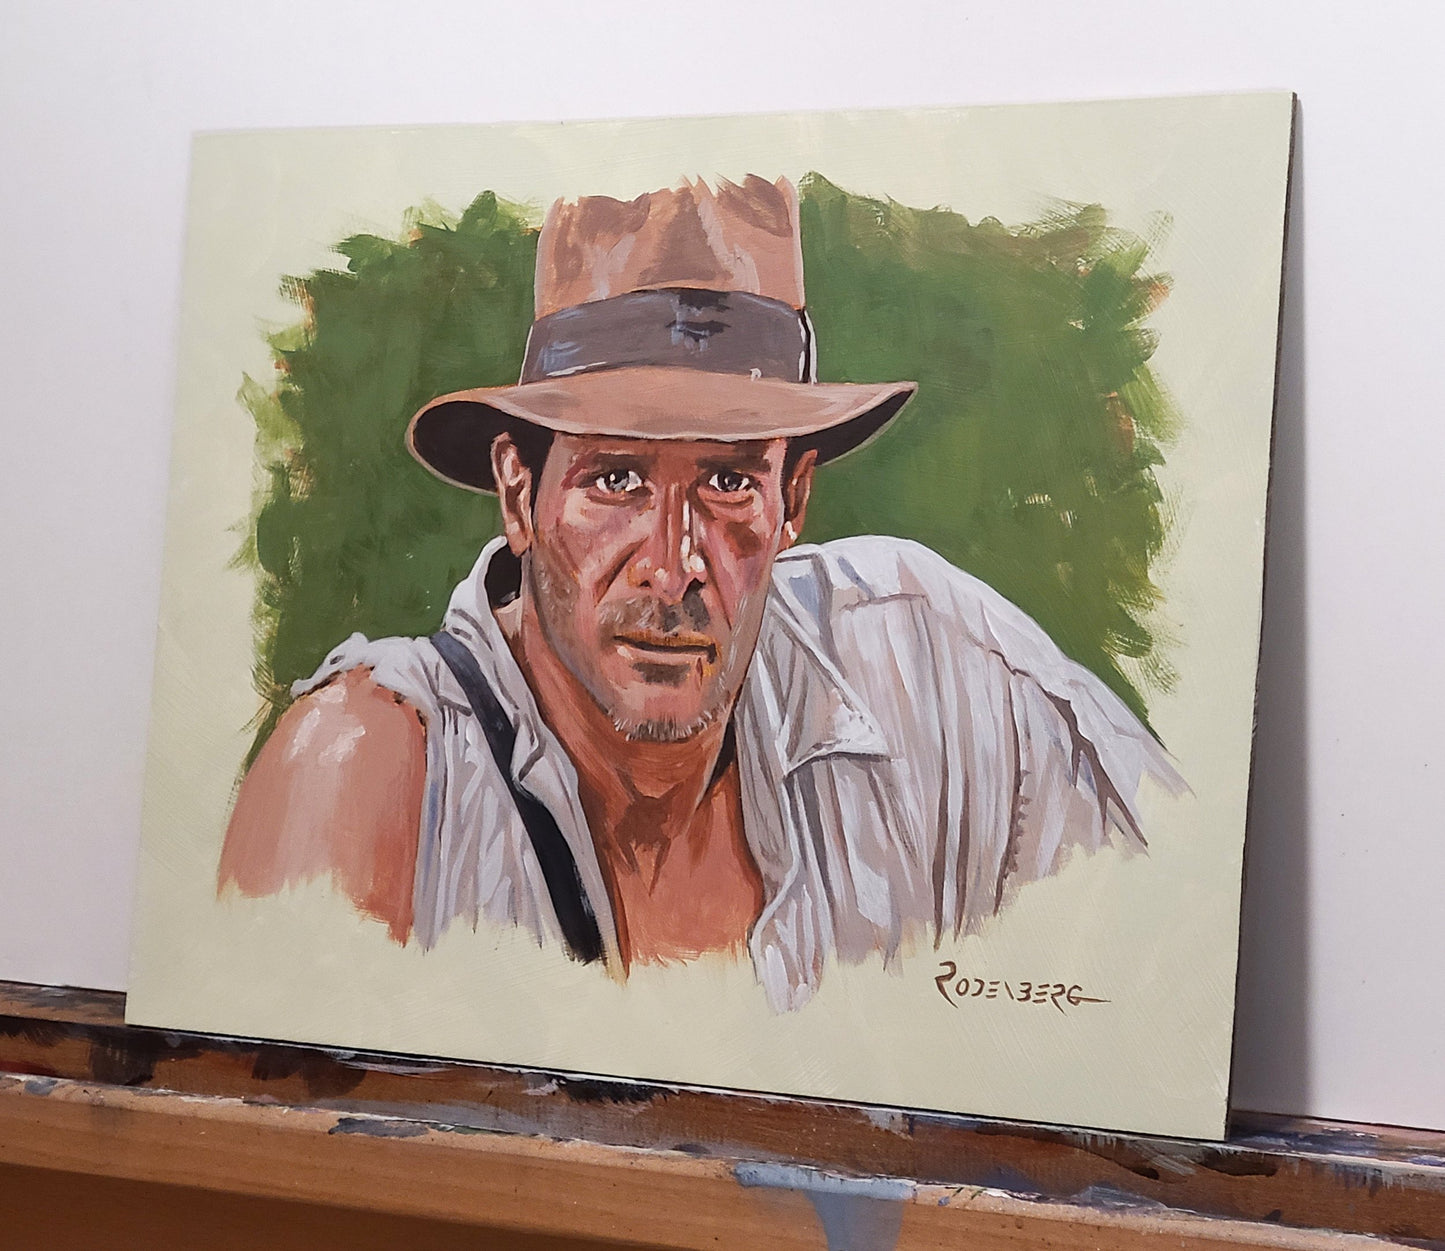 Indiana Jones / Harrison Ford painting